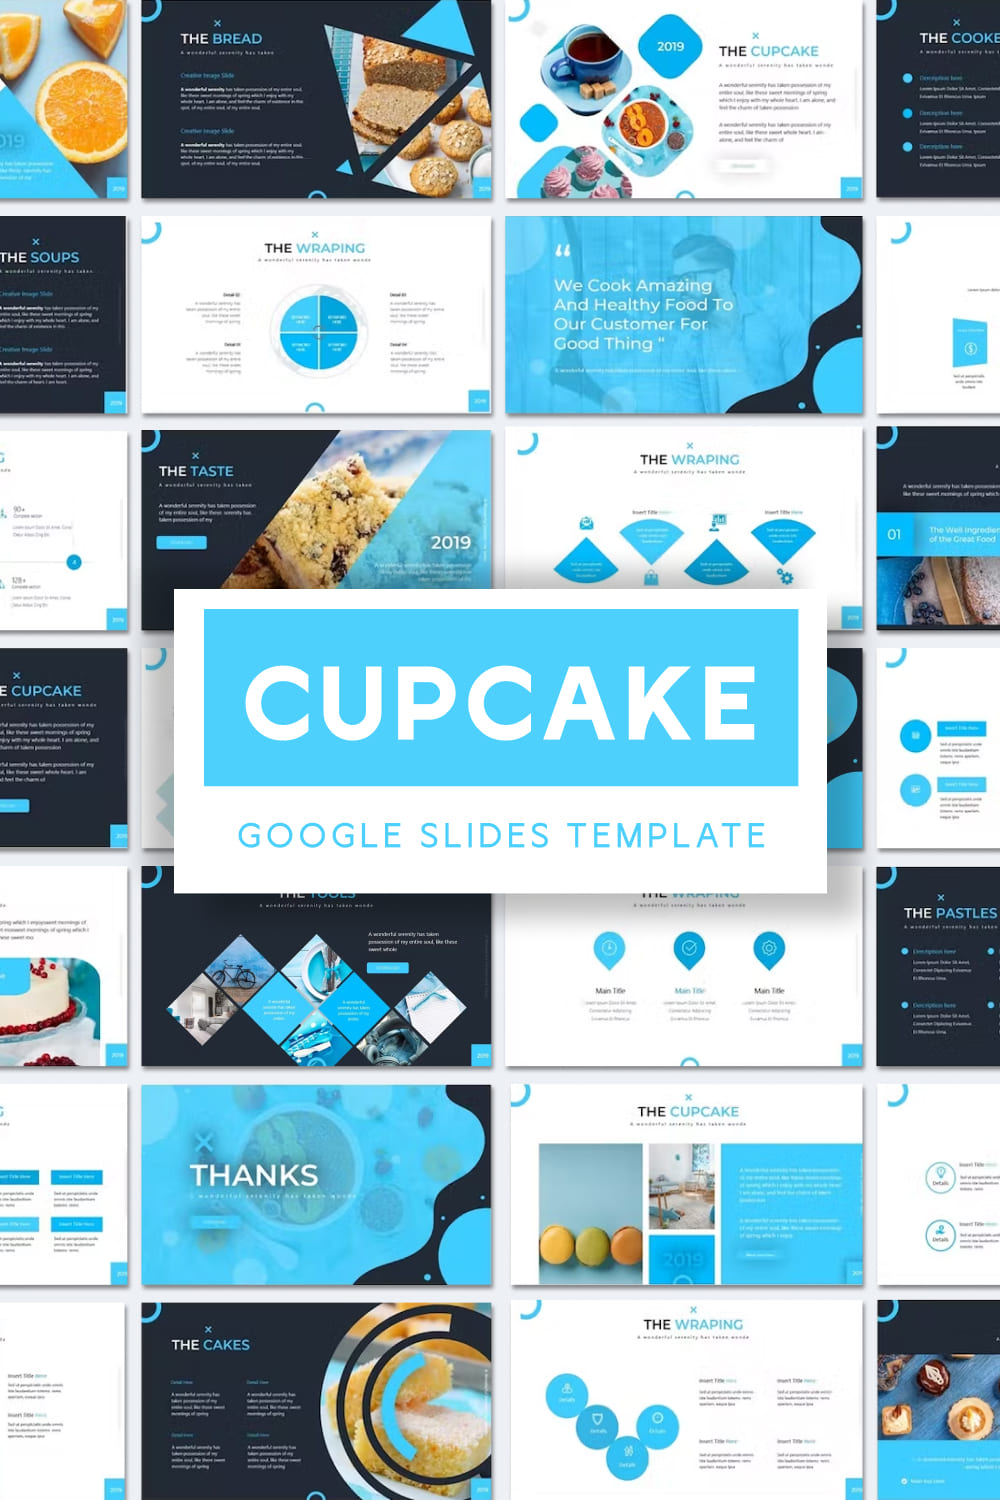 Cupcake | Google Slides Template - Pinterest.